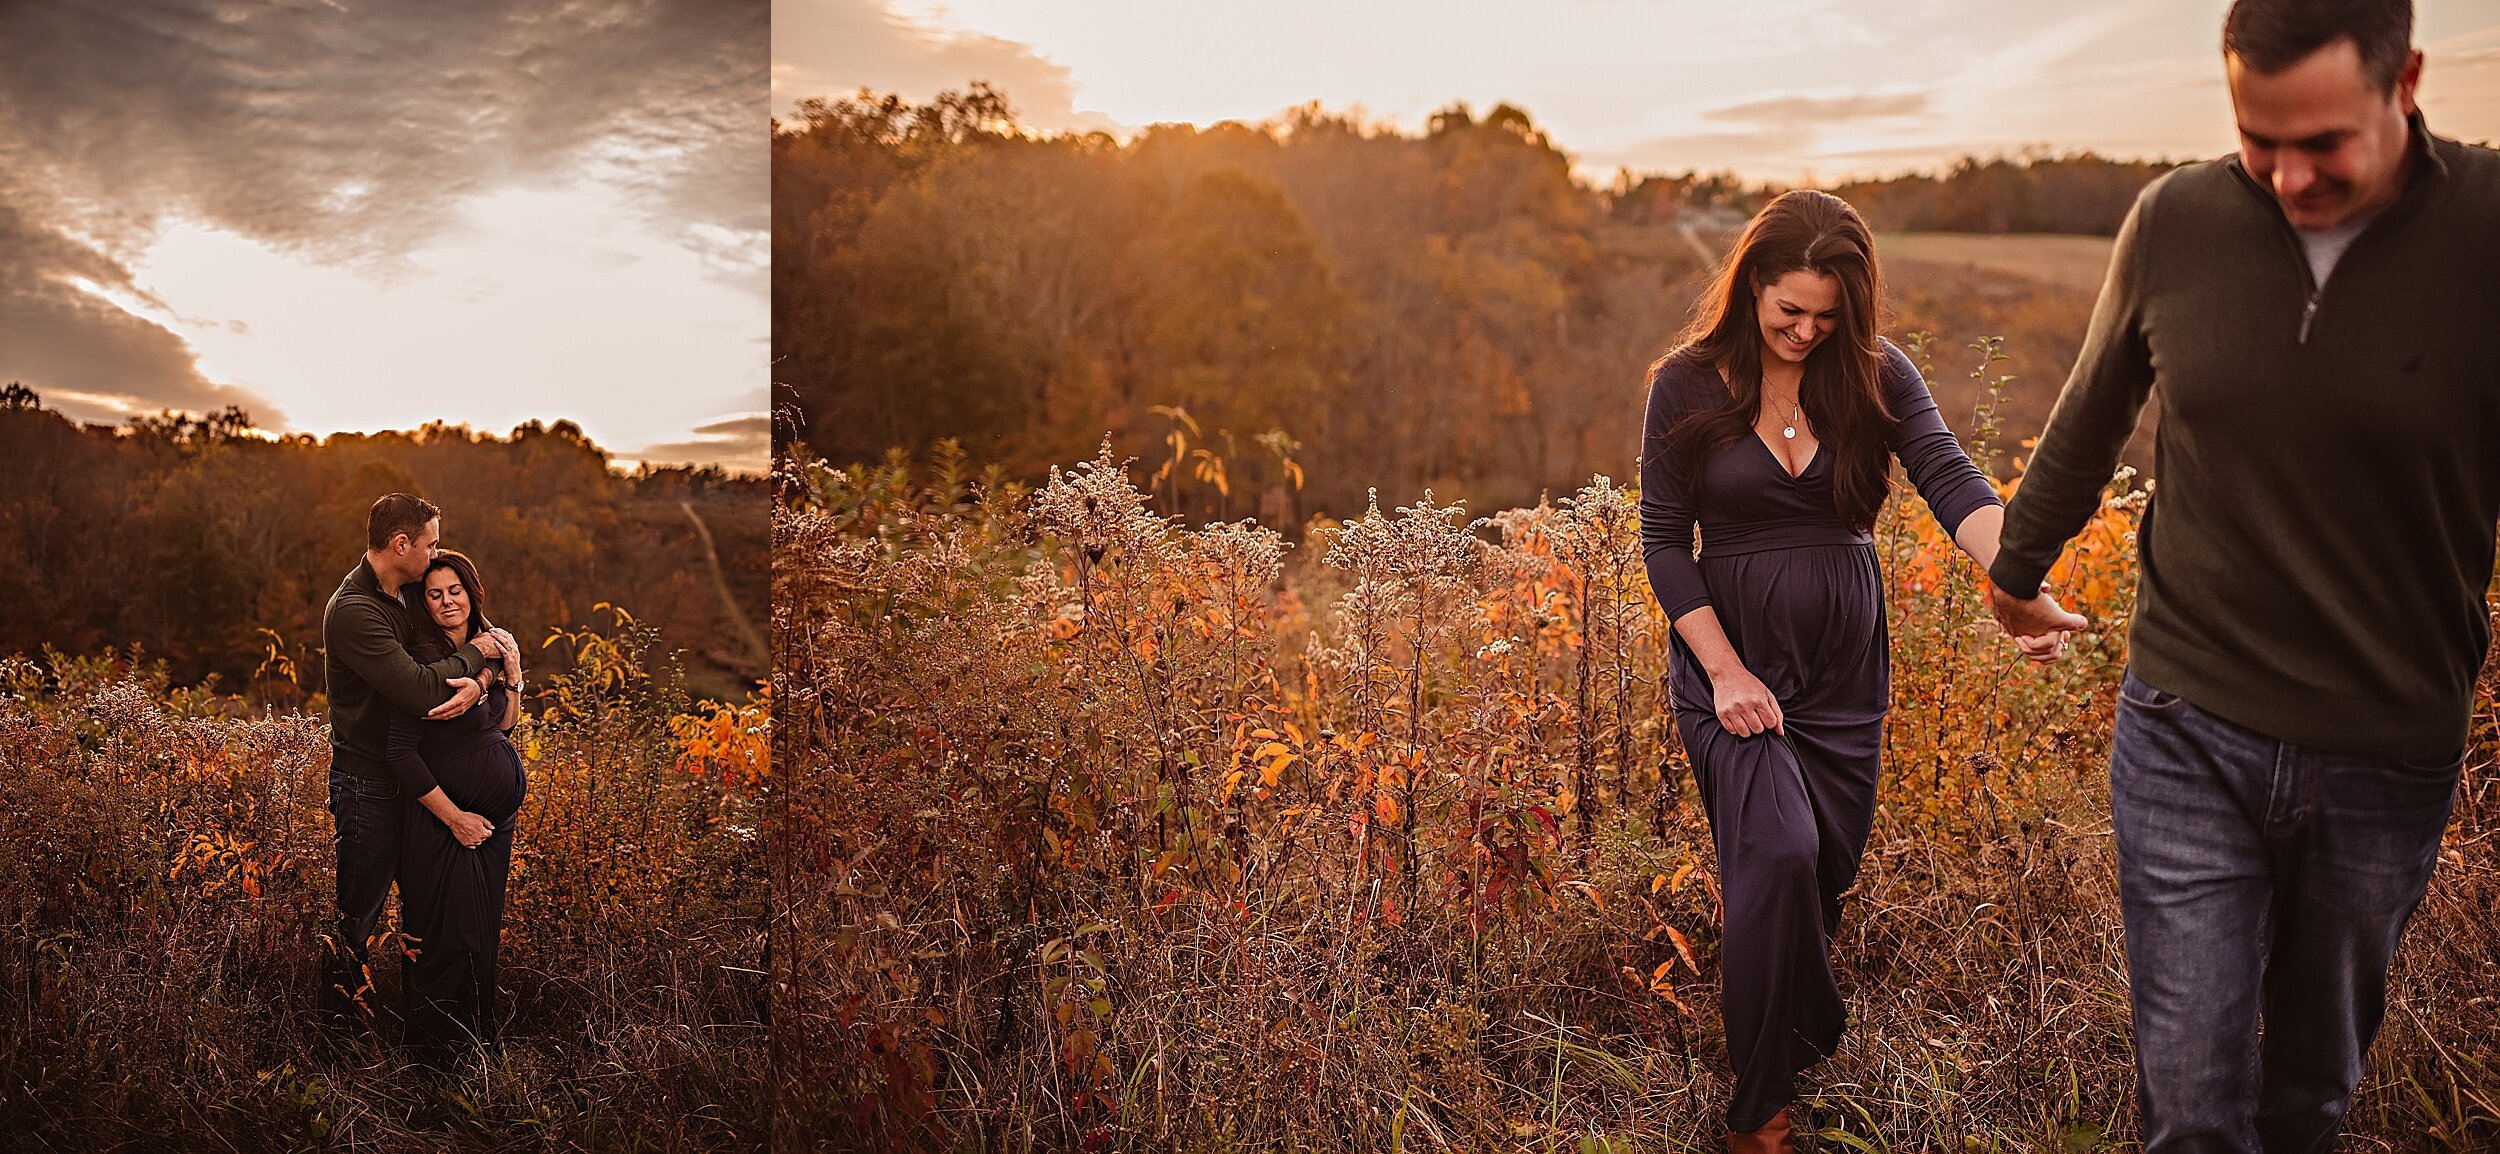 medina-ohio-family-maternity-session-outdoor-sunset-fall-lauren-grayson-photography_0197.jpeg